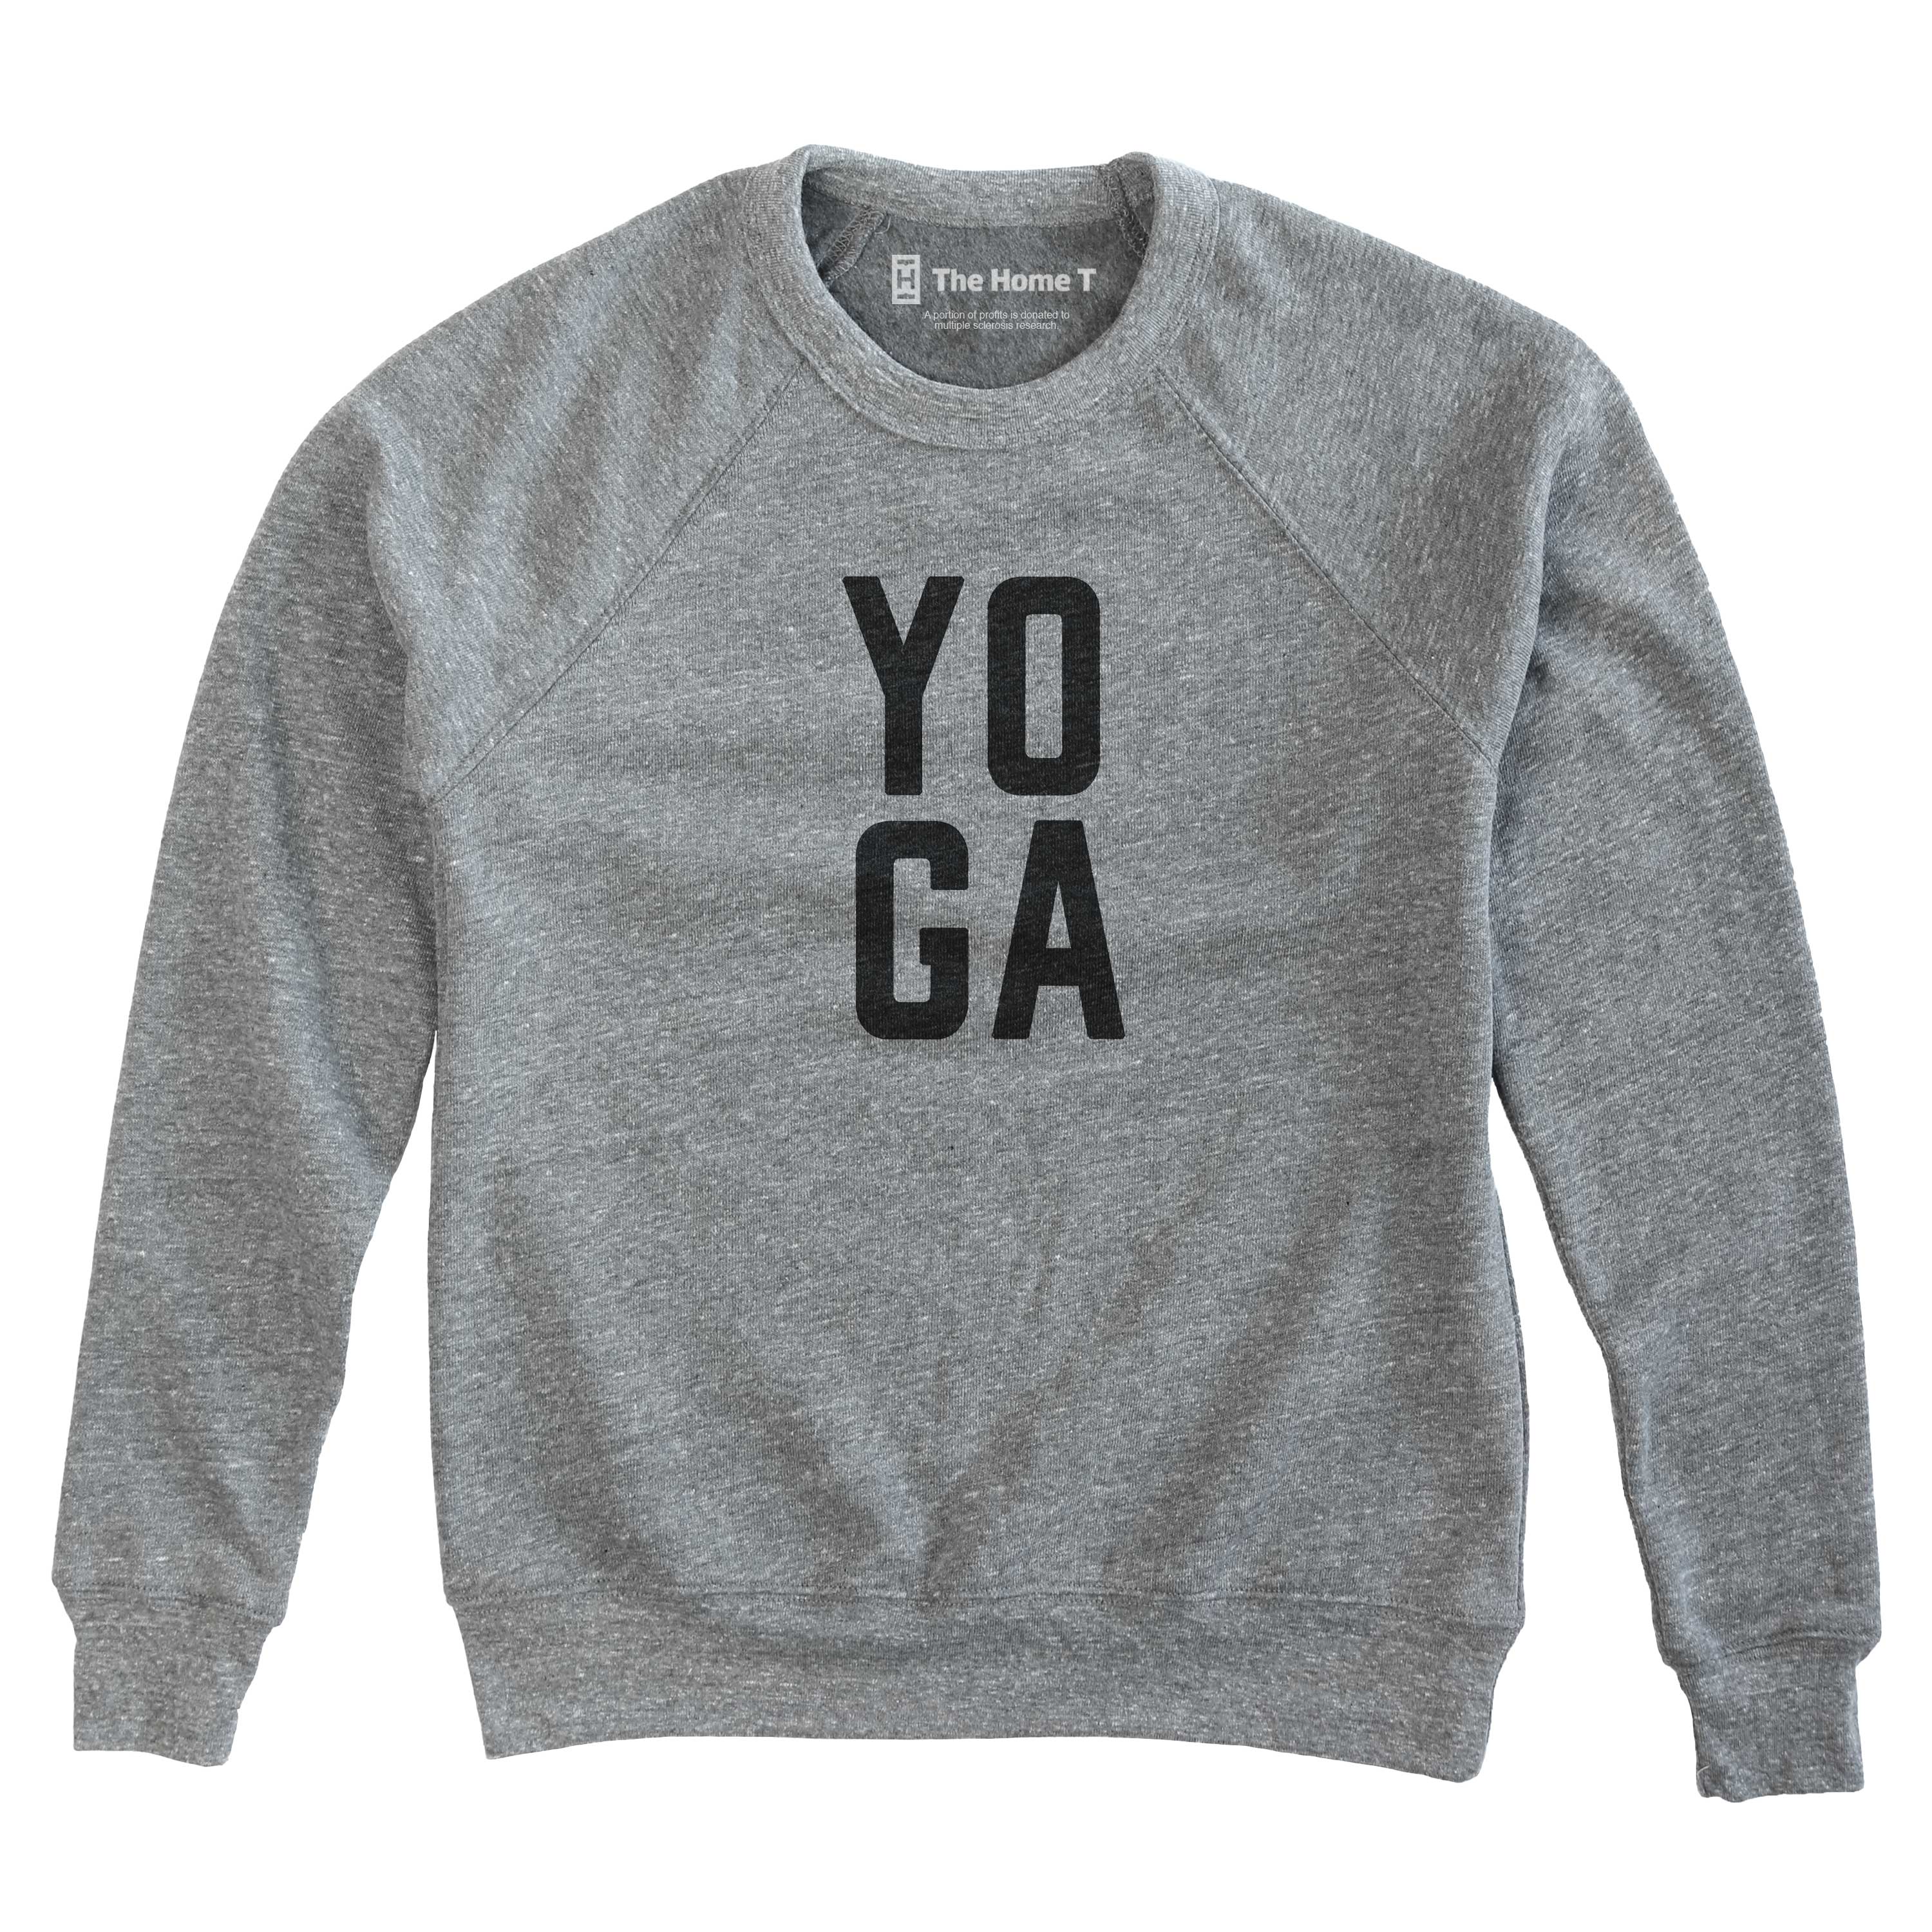 Yoga Crew neck The Home T XS Sweatshirt